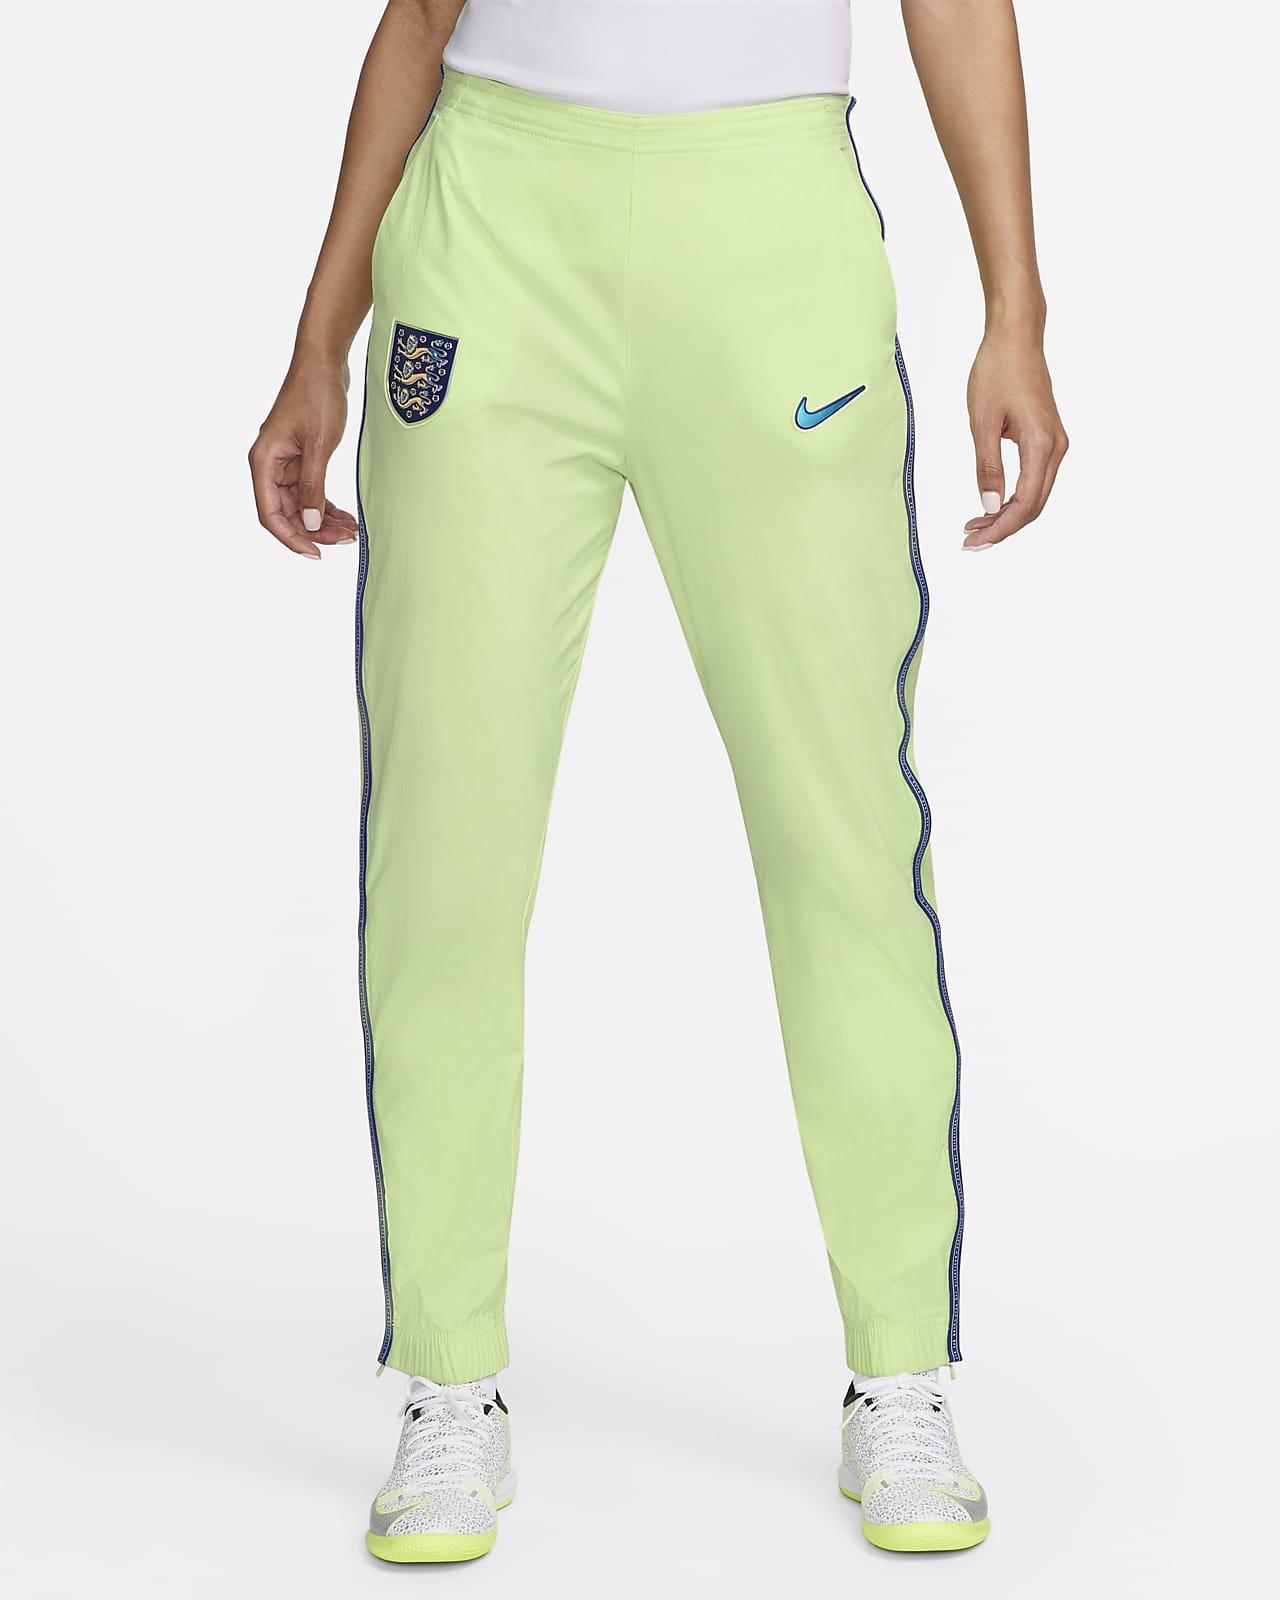 Dámské tkané fotbalové kalhoty Anglie